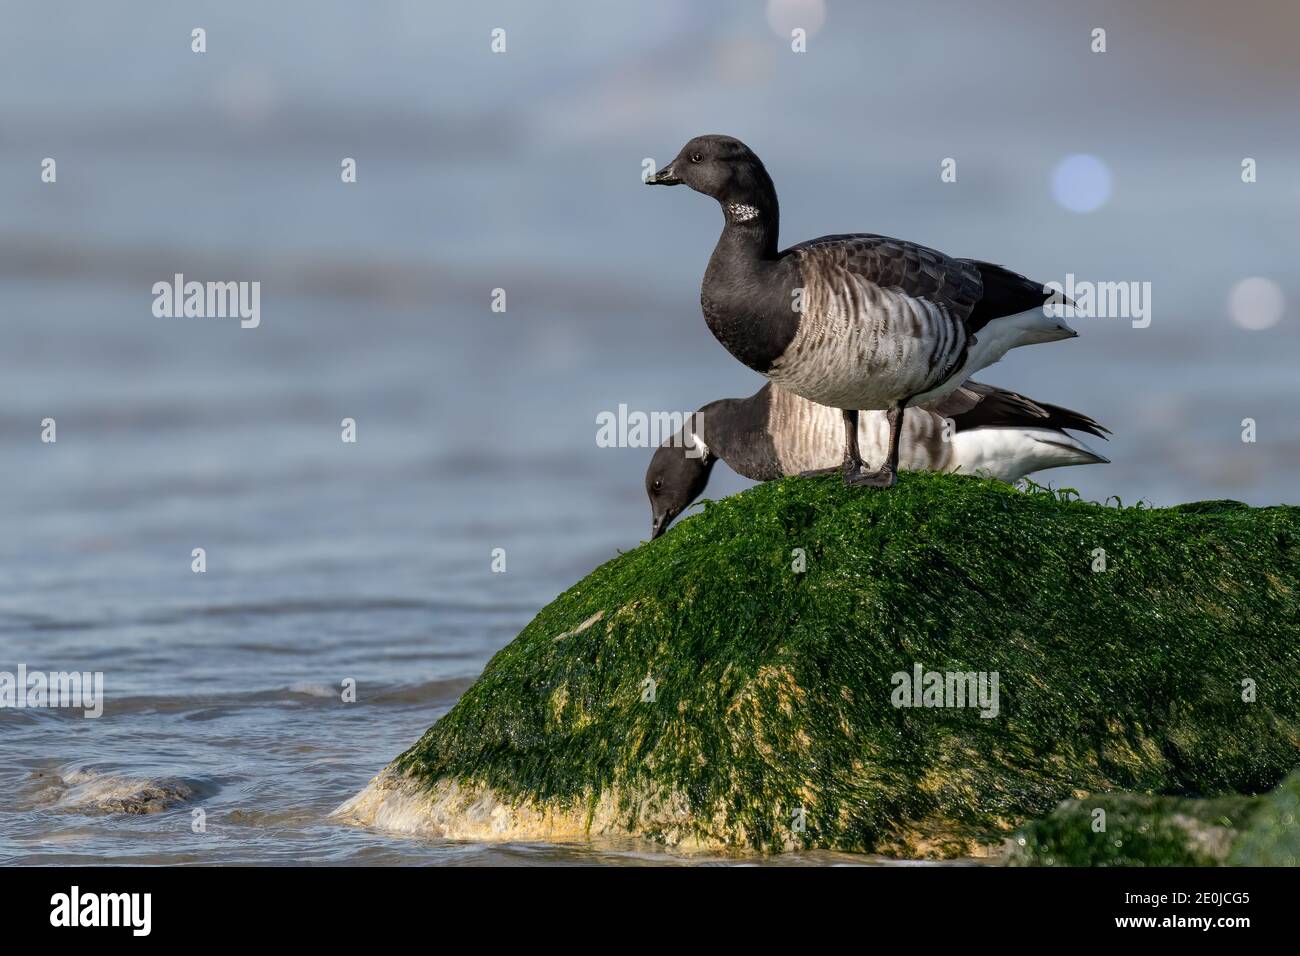 Atlantic Brant Goose, sharp, detailed portrait, on the New Jersey coast Stock Photo